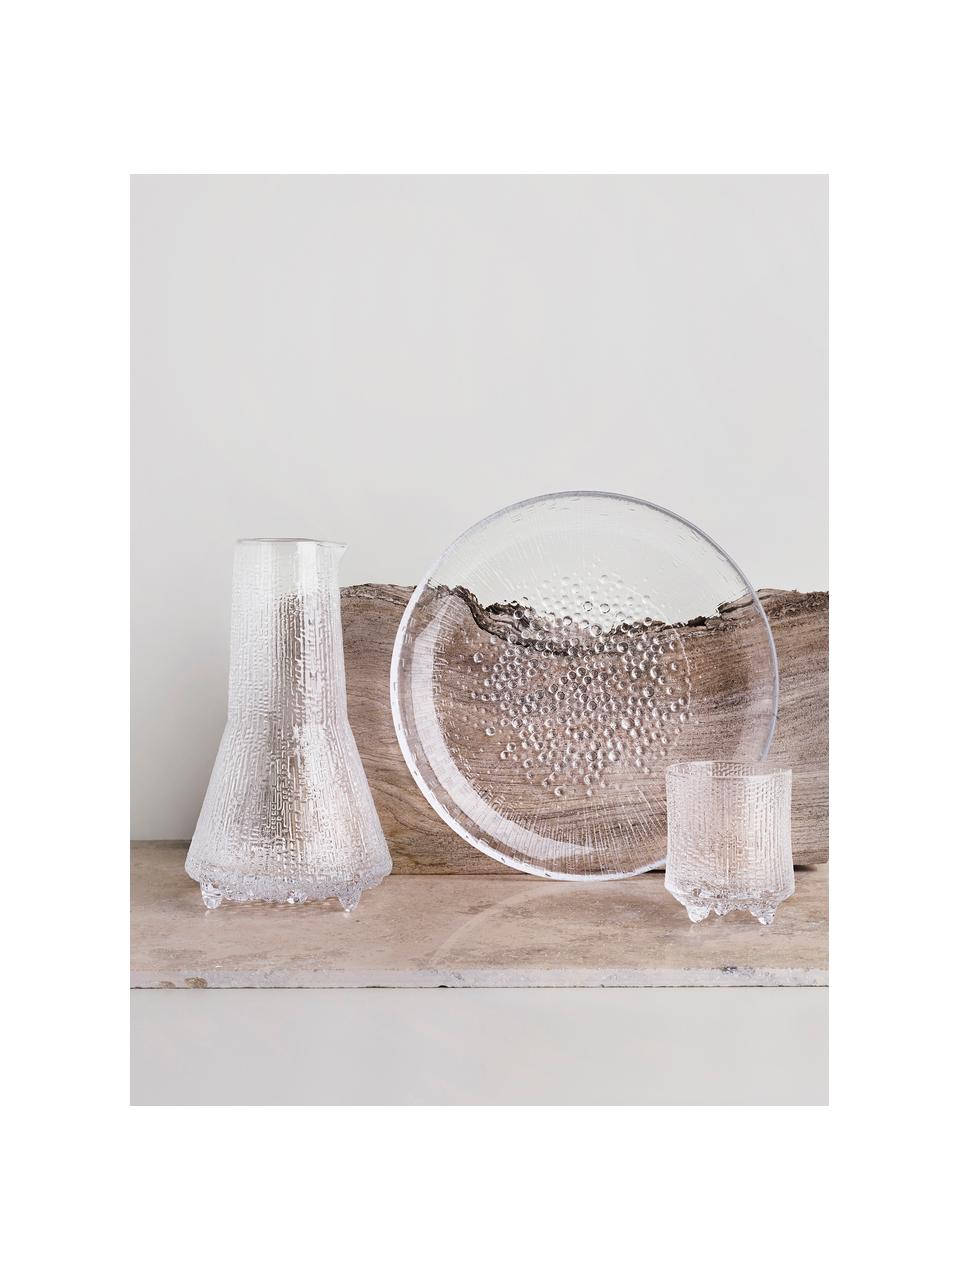 Grote serveerschaal Ultima Thule, Glas, Transparant, Ø 37 x H 8 cm